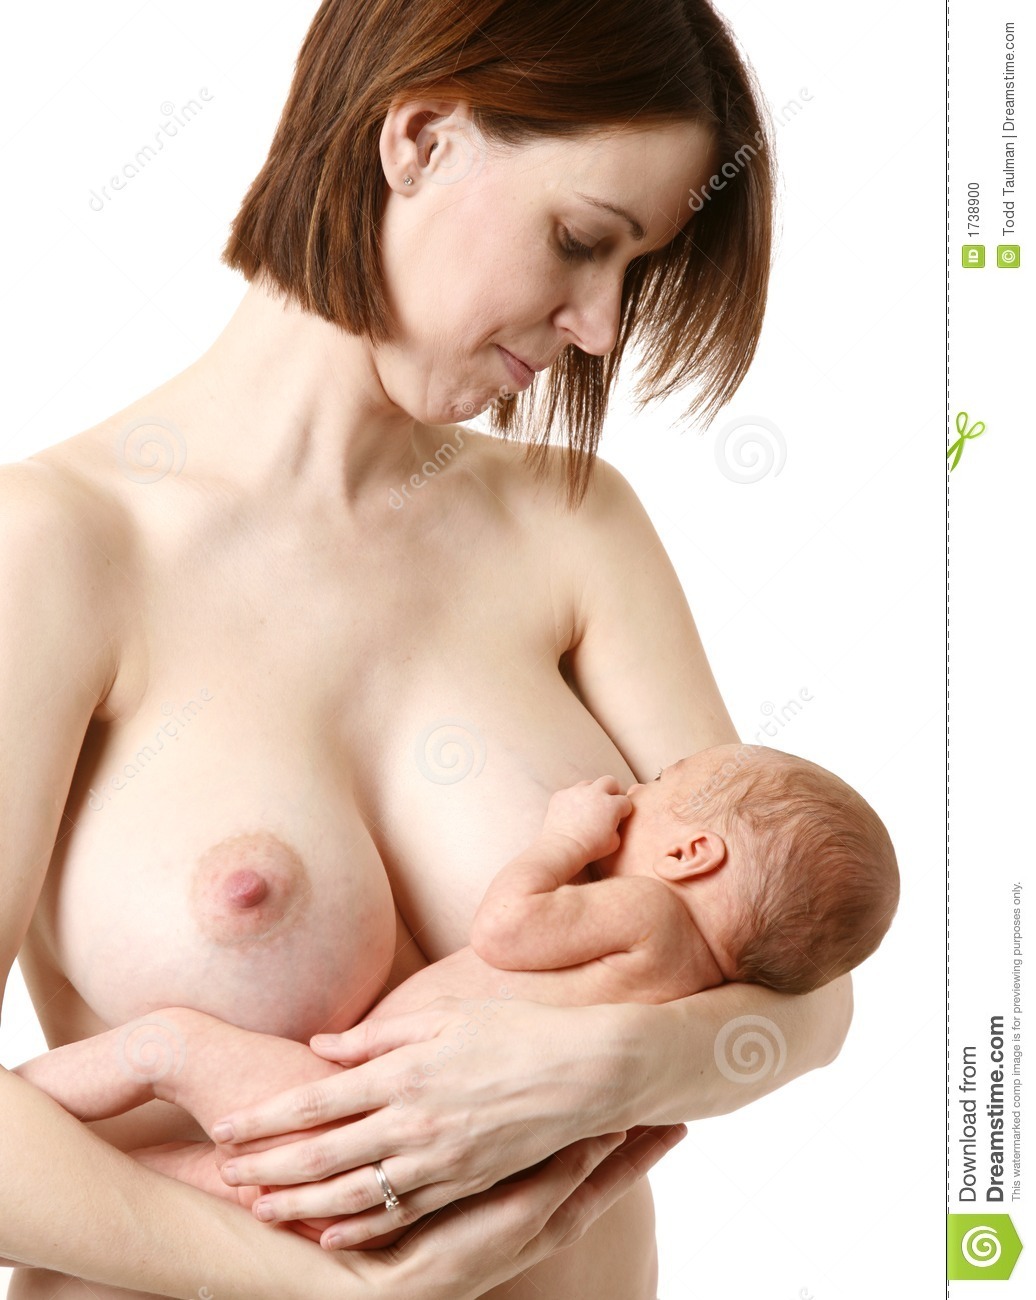 Sonnie fucking mom when breast feeding 4 on rus.sexviptube.com